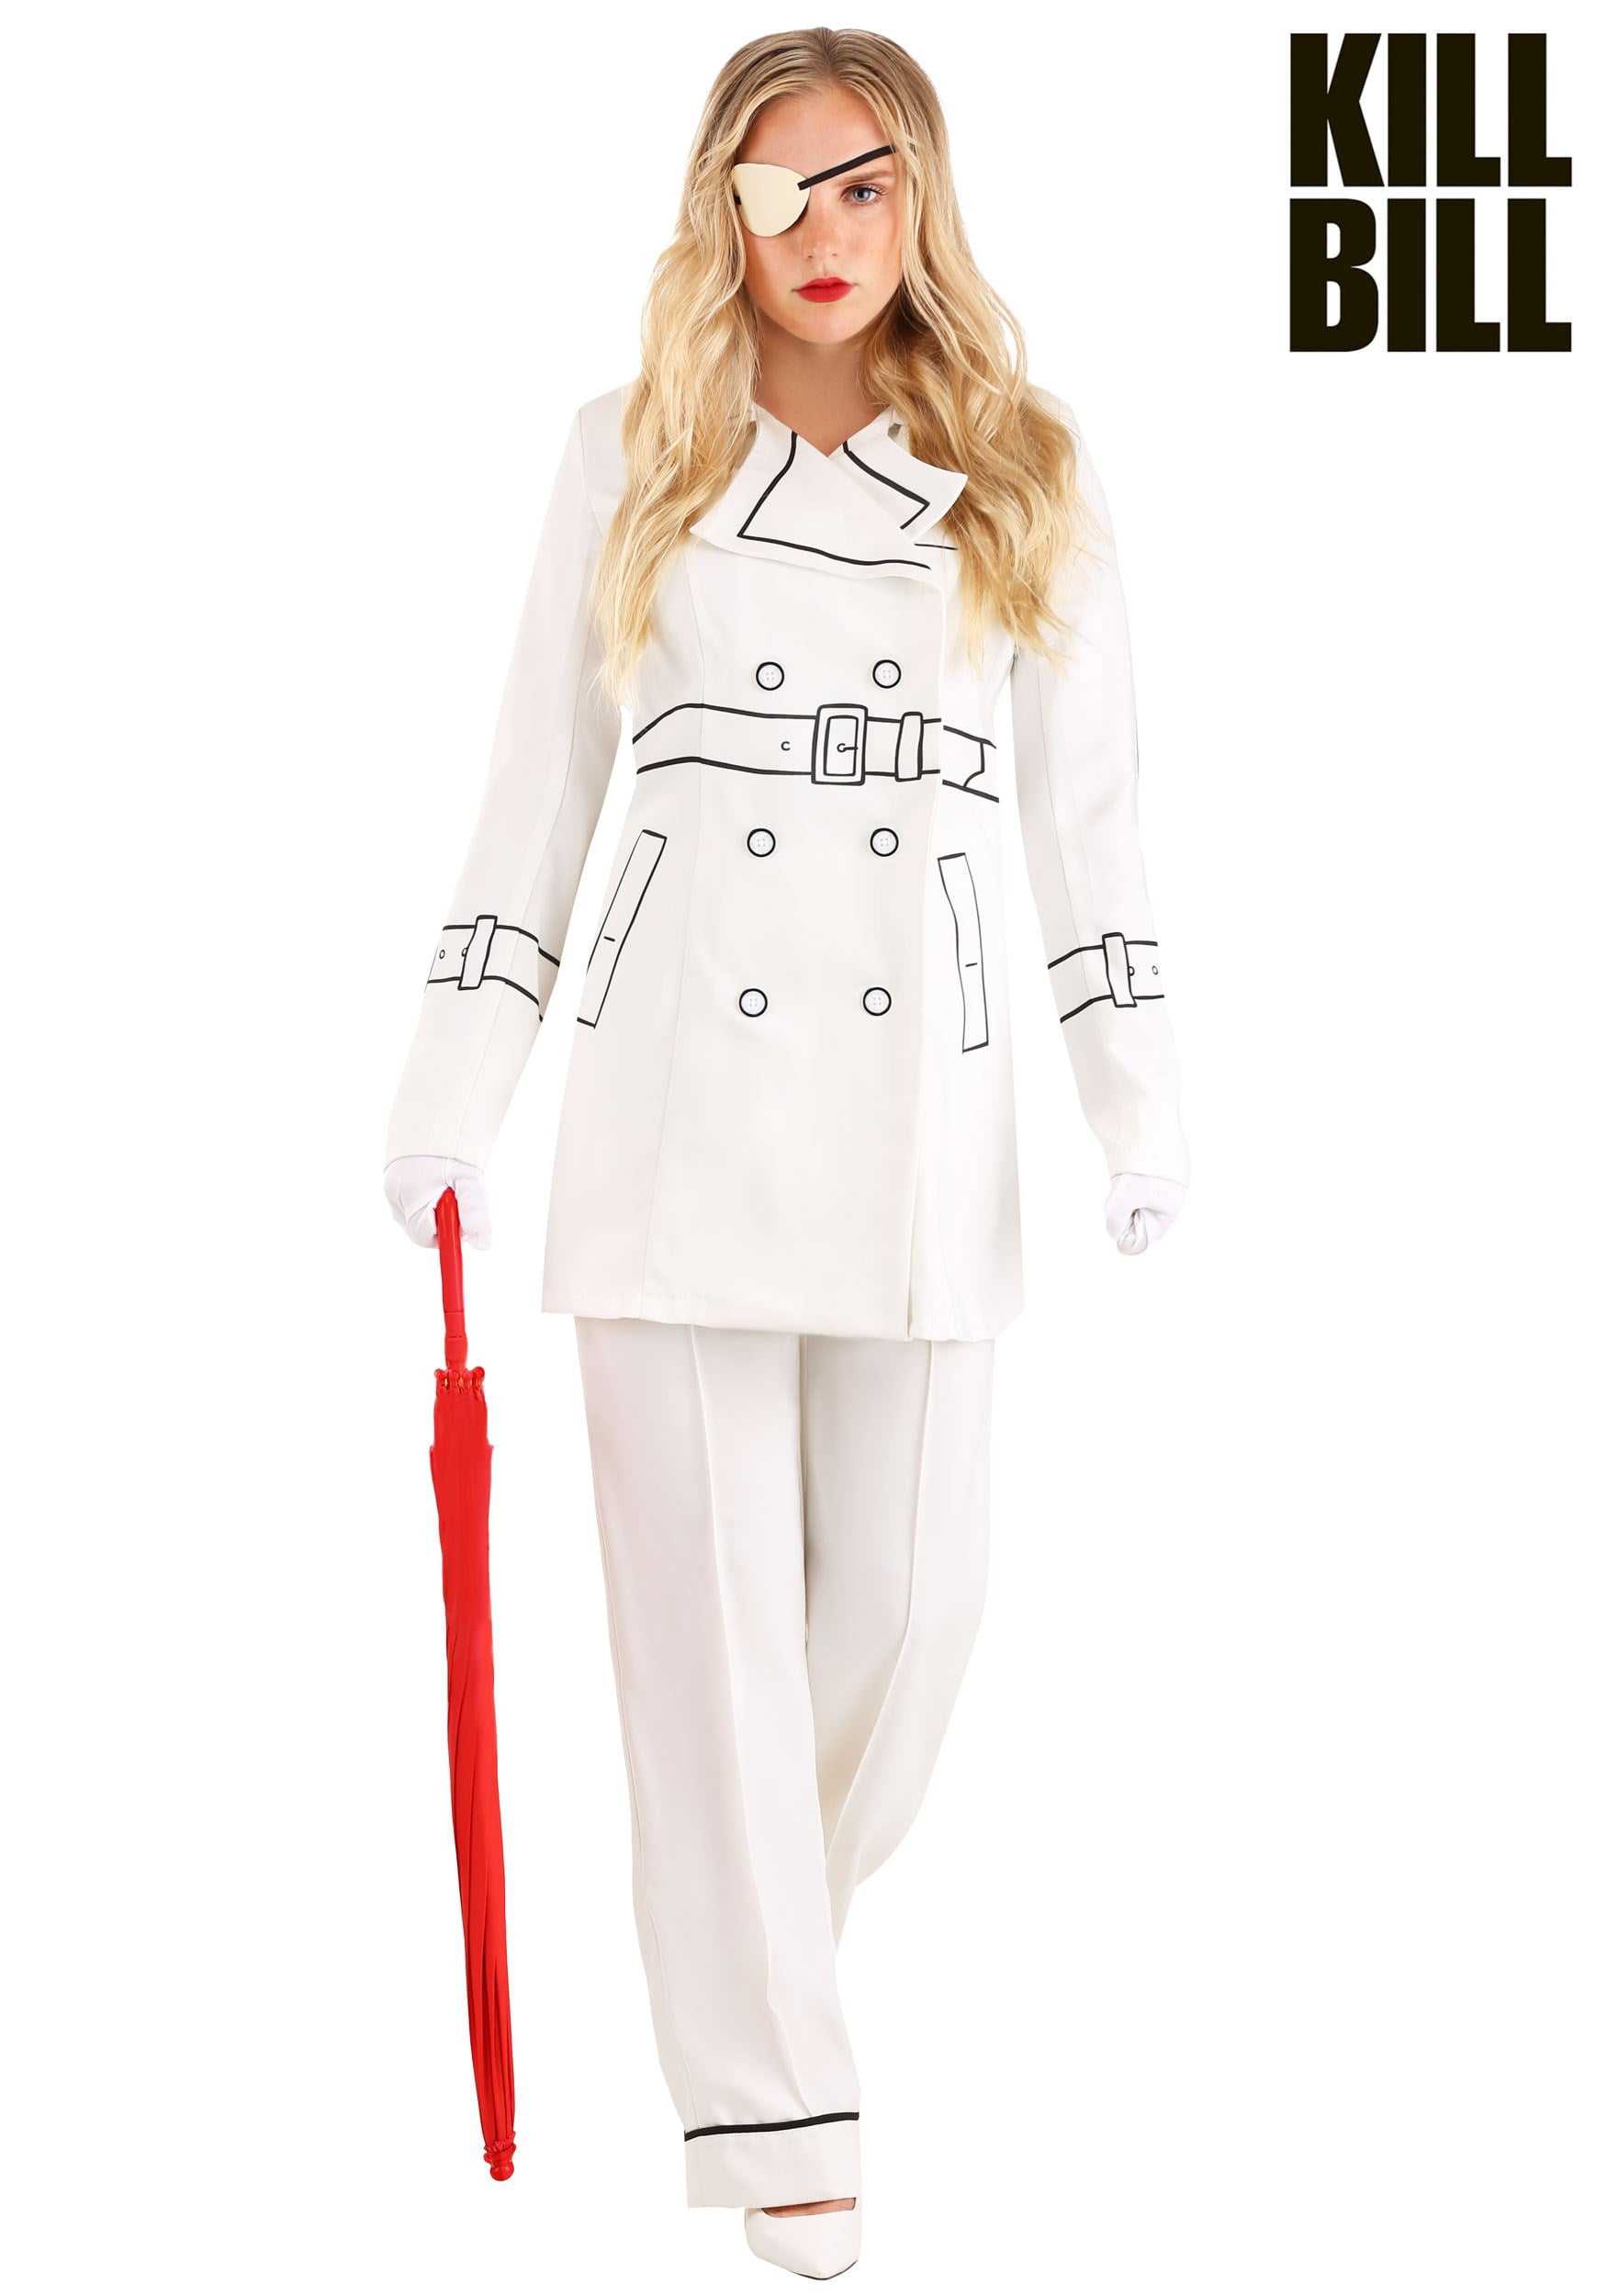 Womens Kill Bill Style Nurse Elle Driver Adult Fancy Dress Costume White & Red 